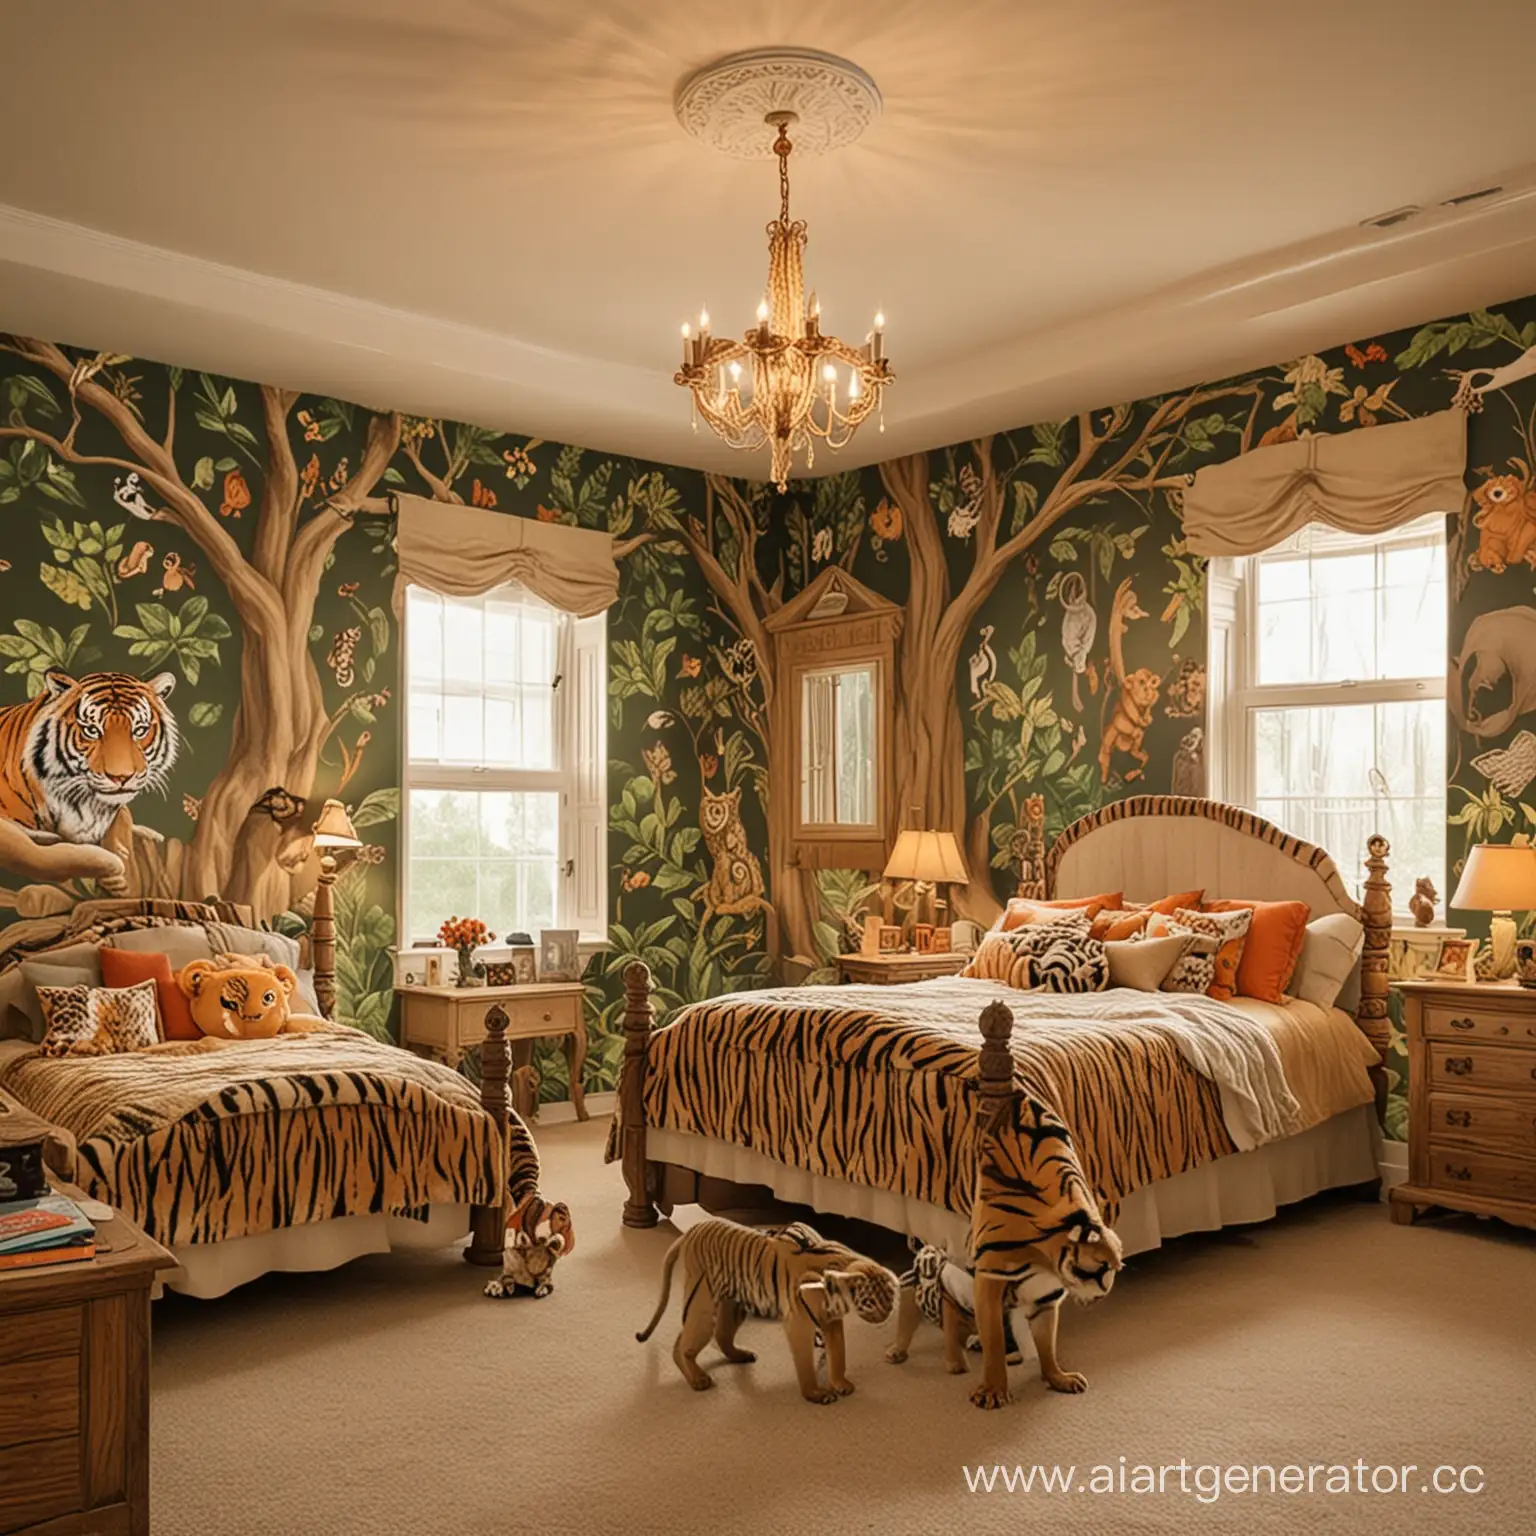 tigers, lions, monkeys,bears in one room for kids
